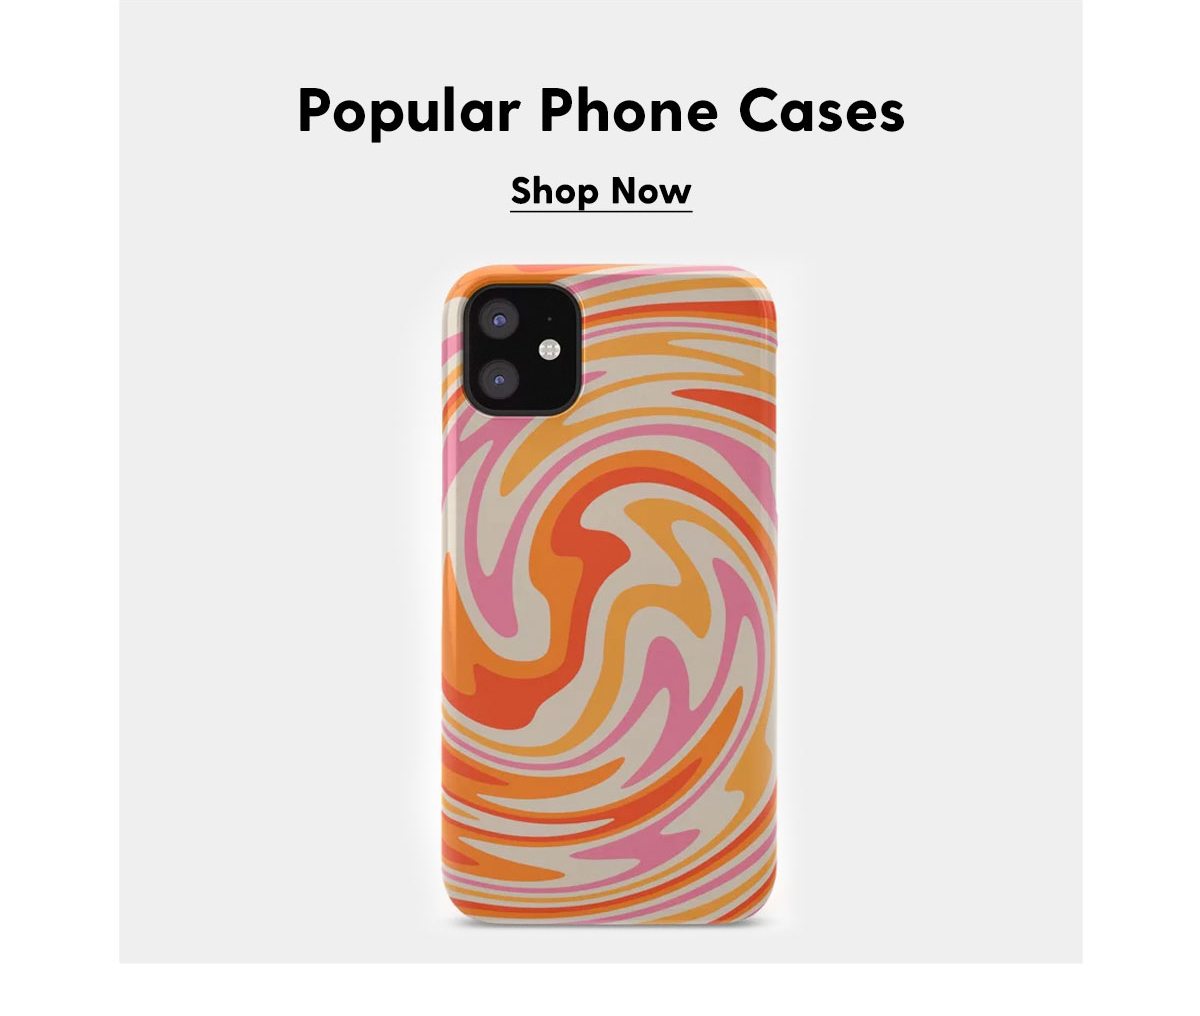 Popular Phone Cases Shop Now